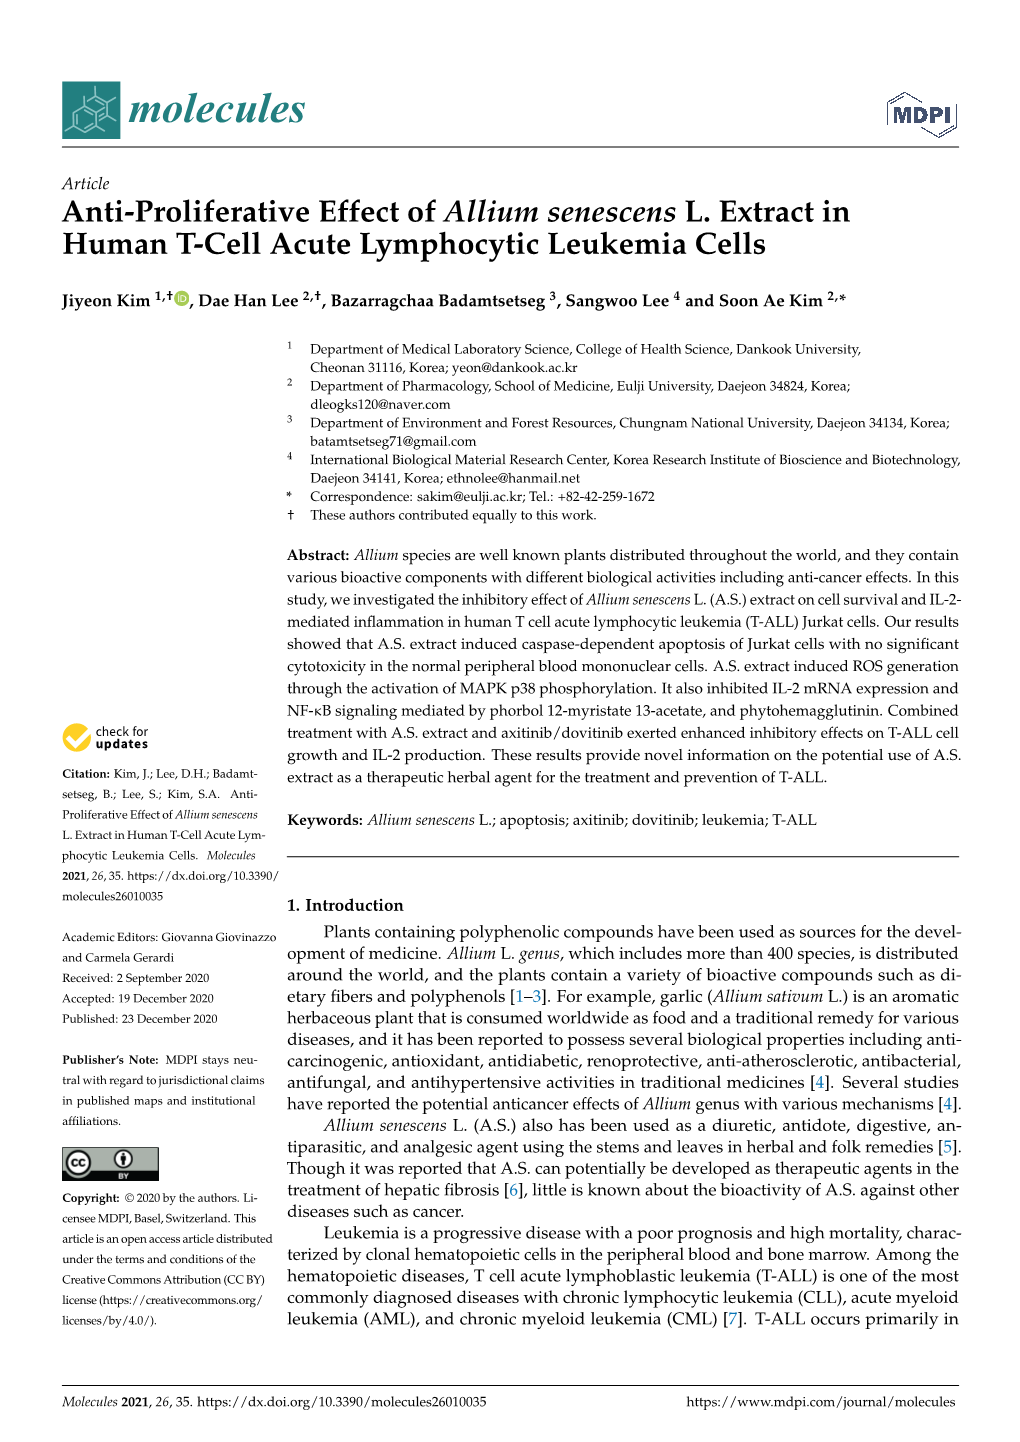 Anti-Proliferative Effect of Allium Senescens L. Extract in Human T-Cell Acute Lymphocytic Leukemia Cells